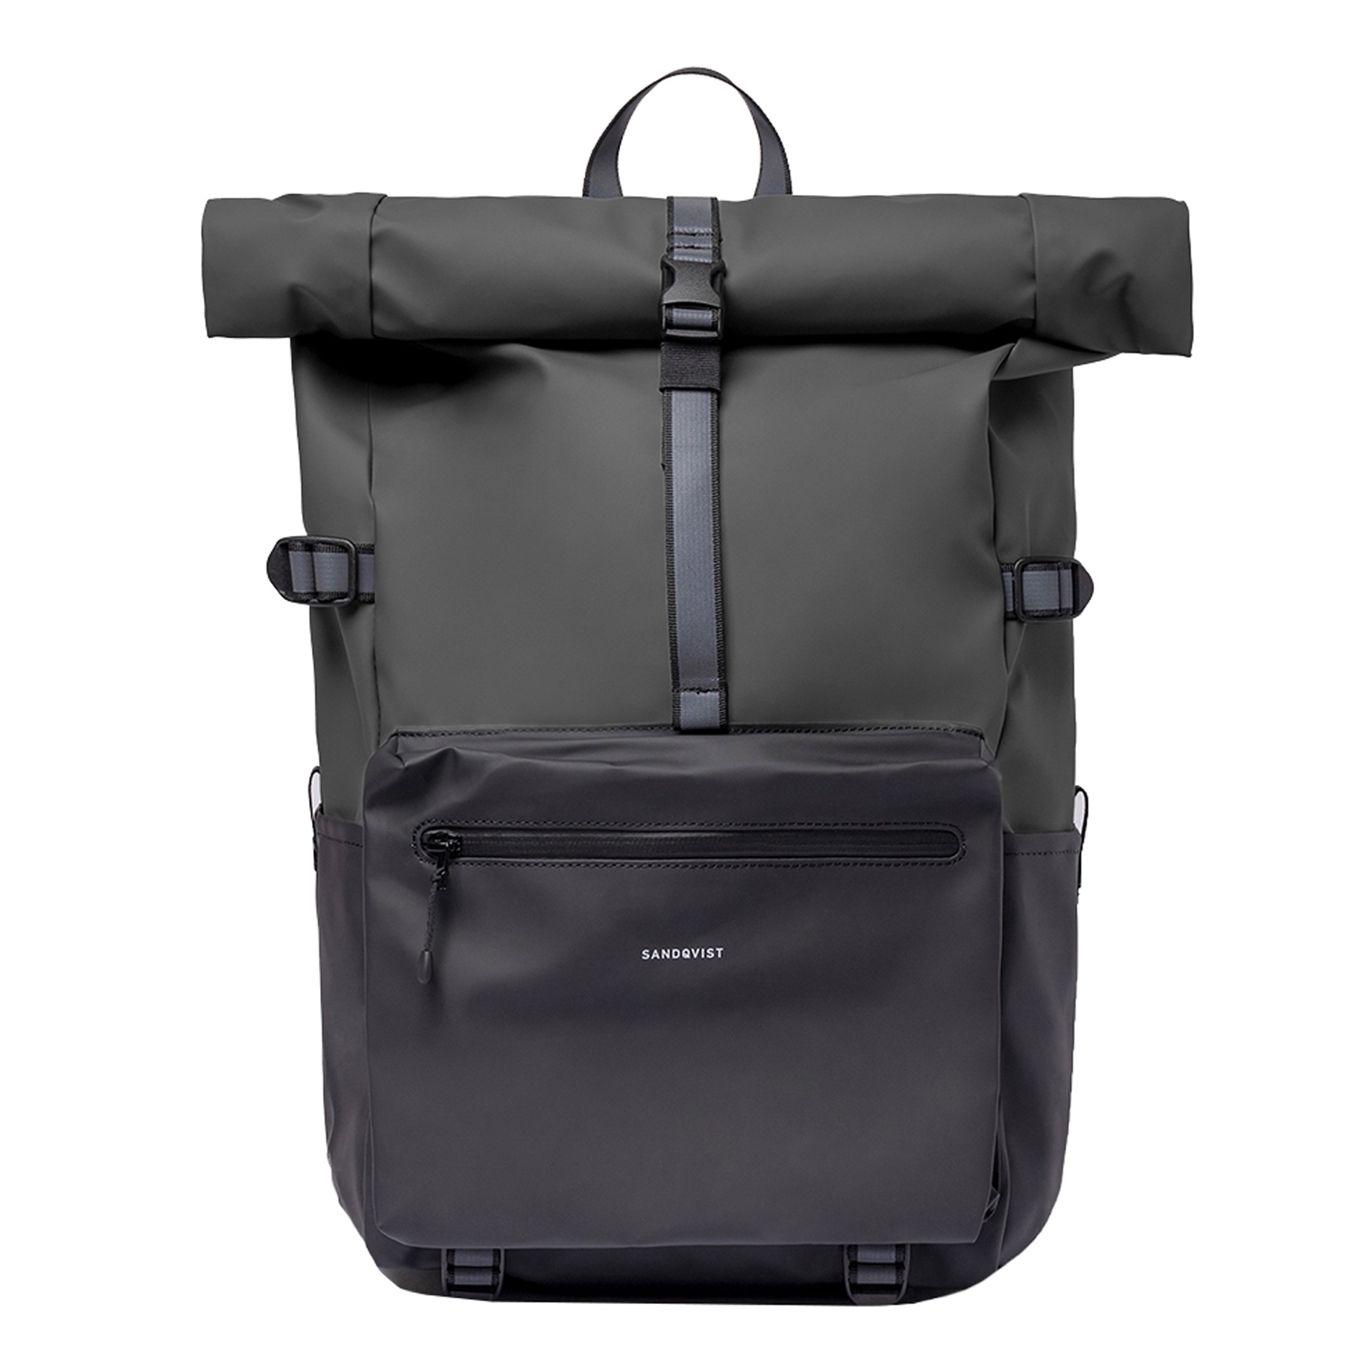 Sandqvist Ruben 2.0 Backpack – multi dark